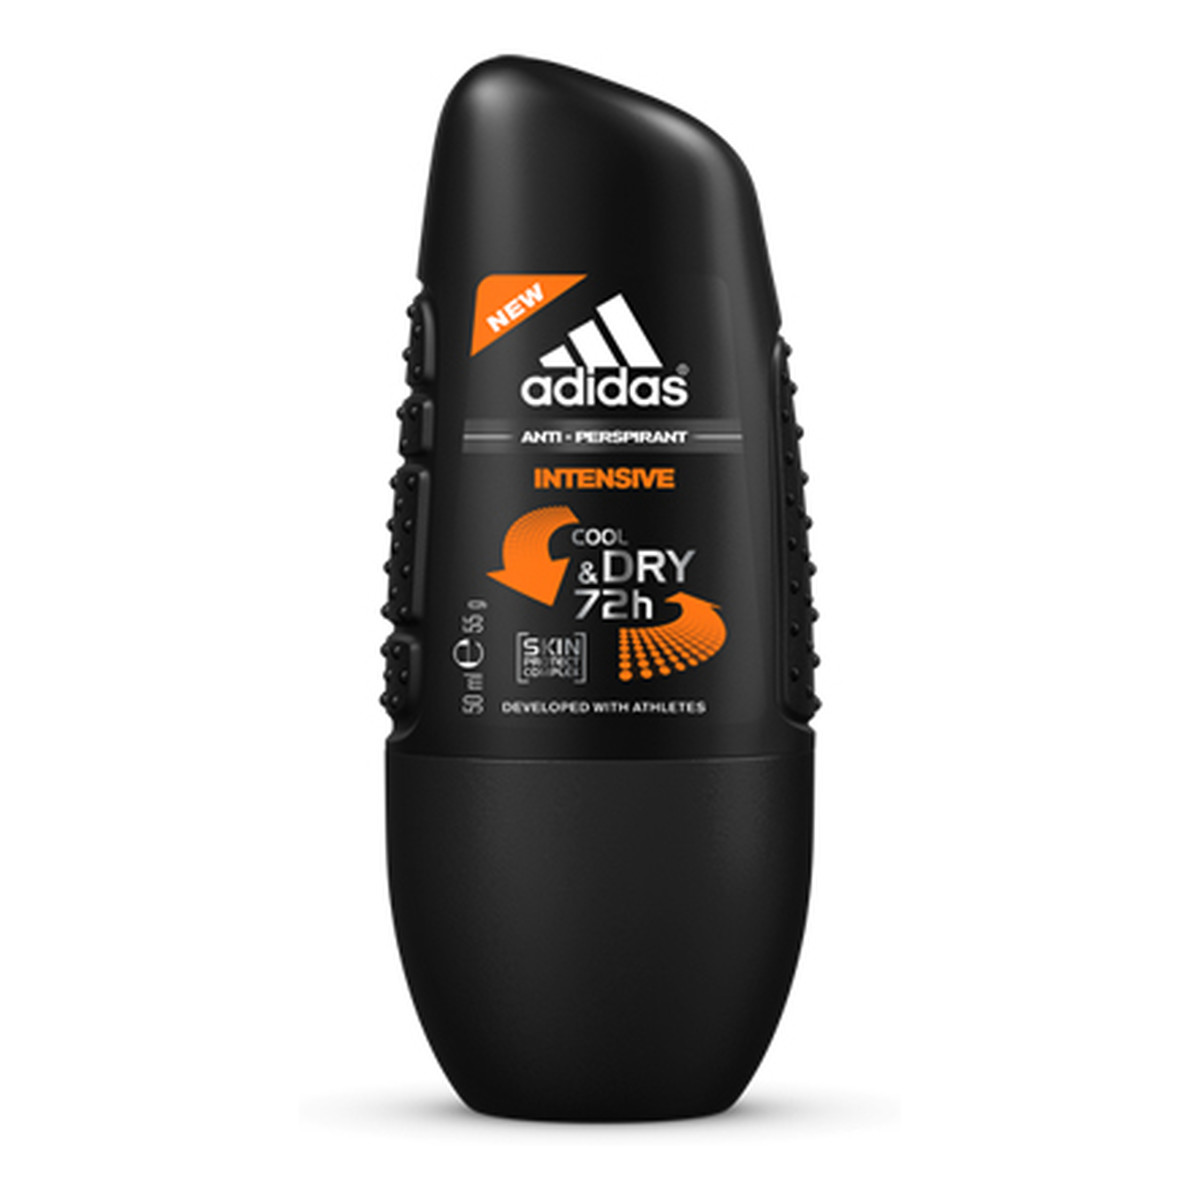 Adidas Cool & Dry Men Antyperspirant Roll On Intensive 50ml